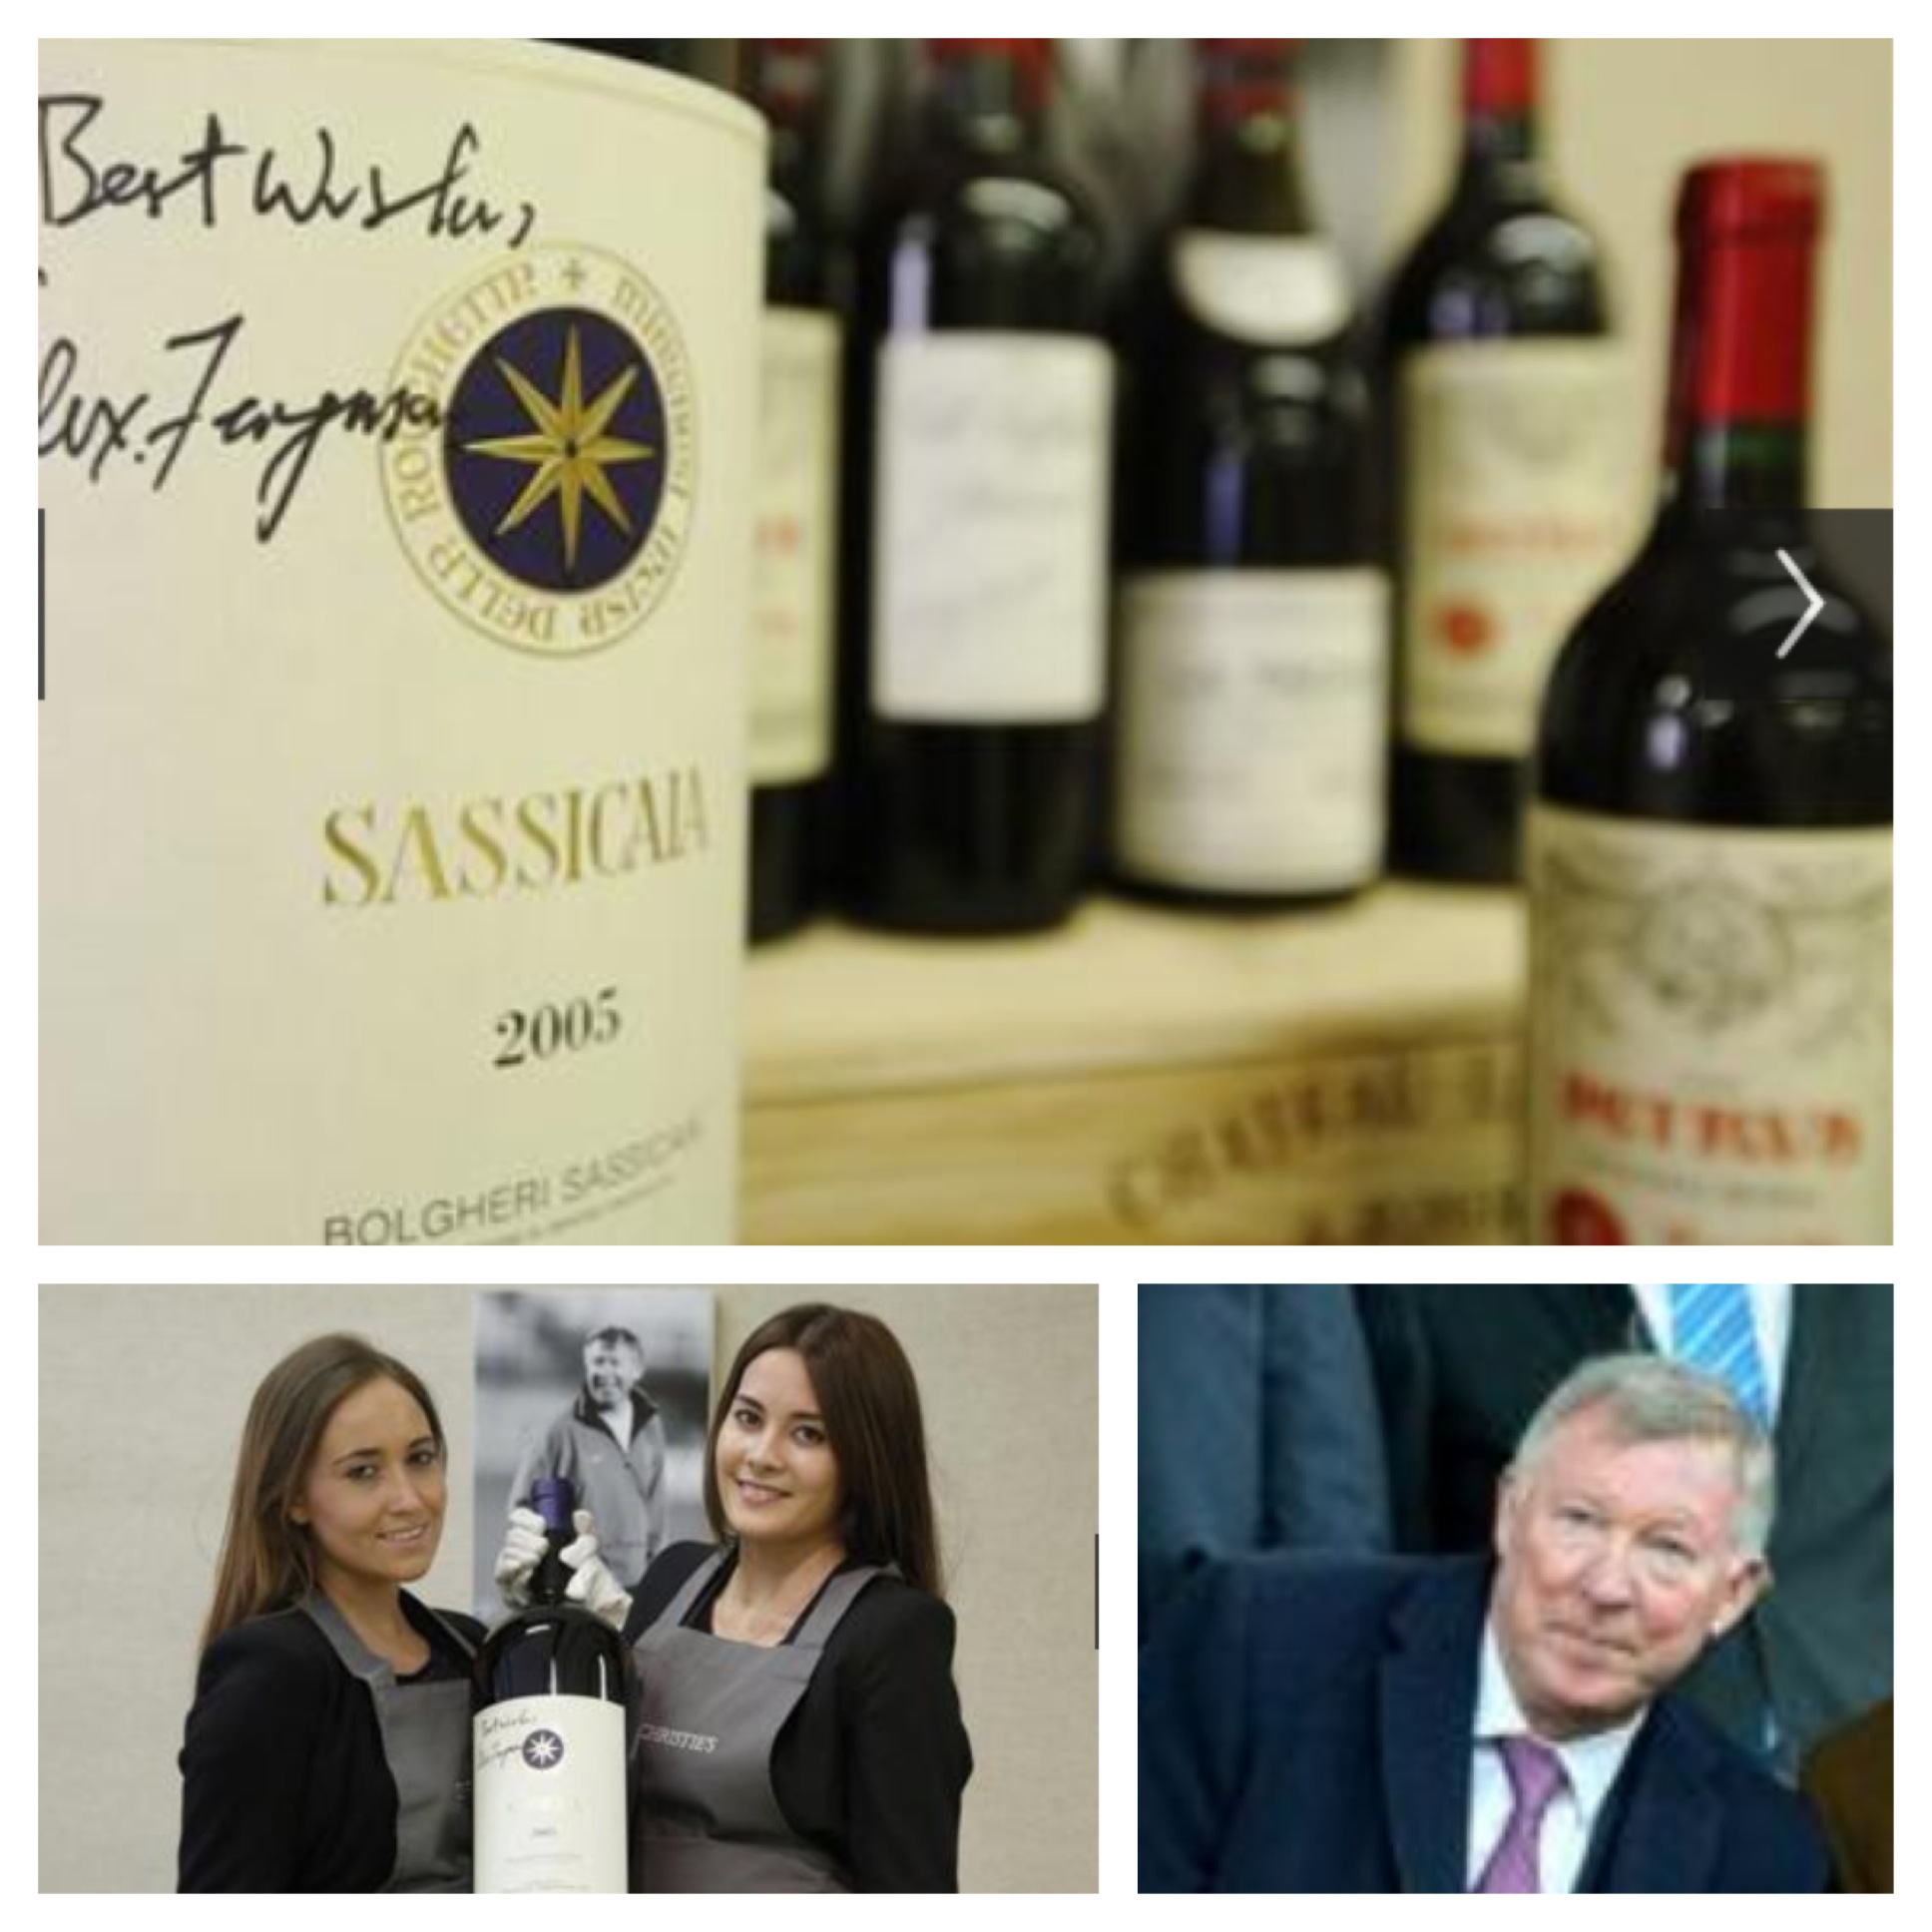 Sir Alex Ferguson plans to auction wine collection